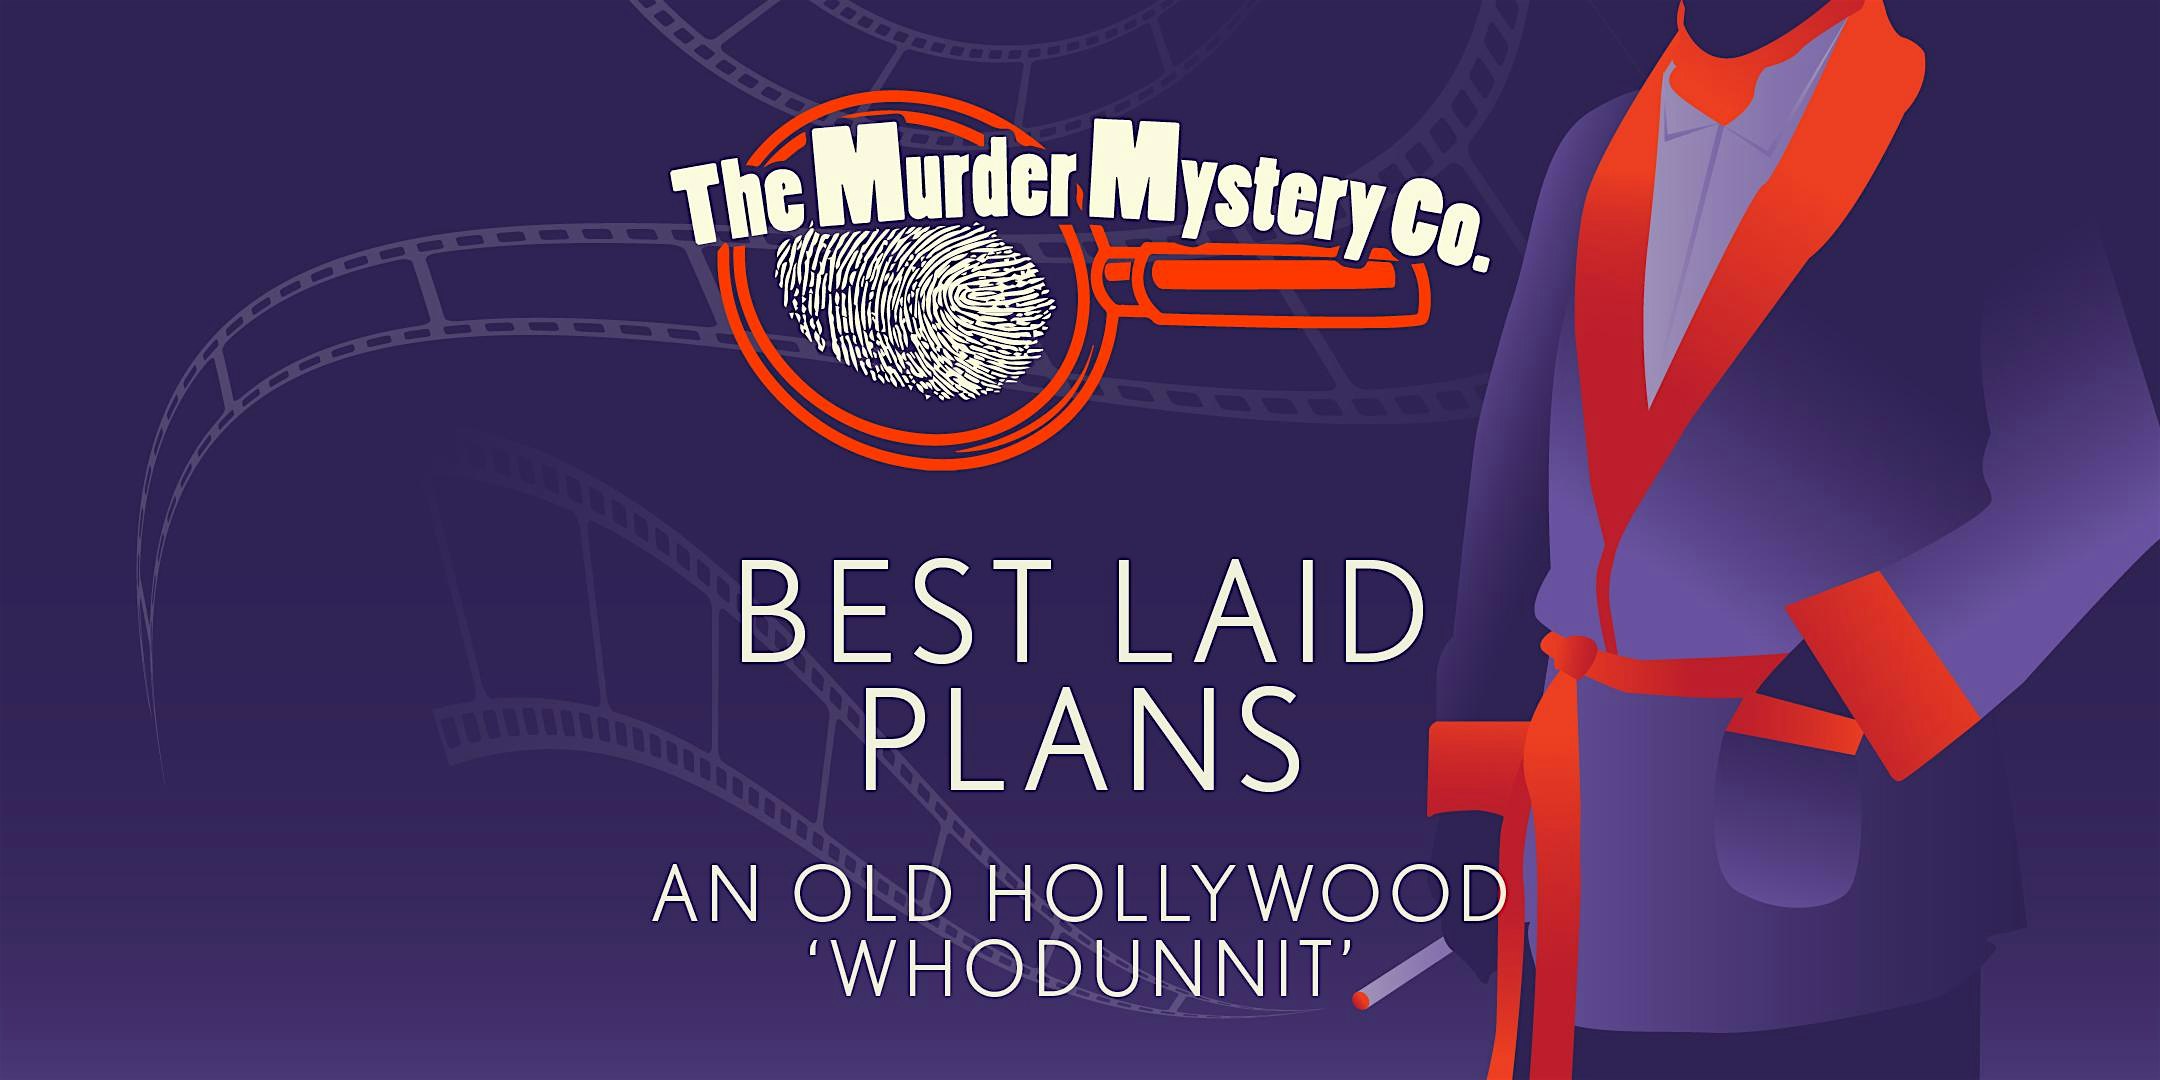 Murder Mystery Dinner Theater Show in Houston: Best Laid Plans